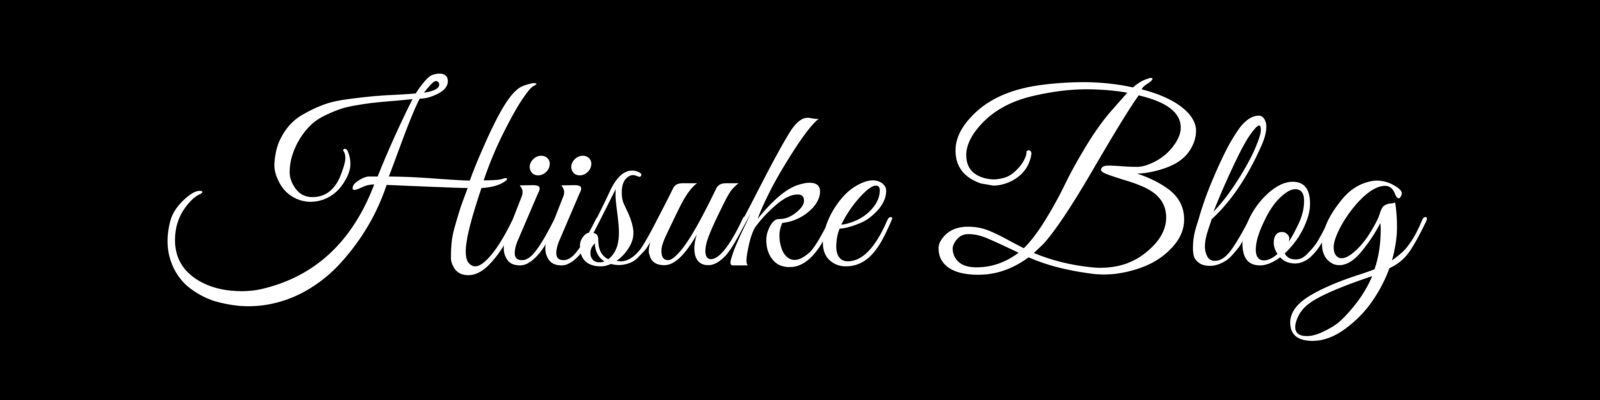 Hiisuke Blog